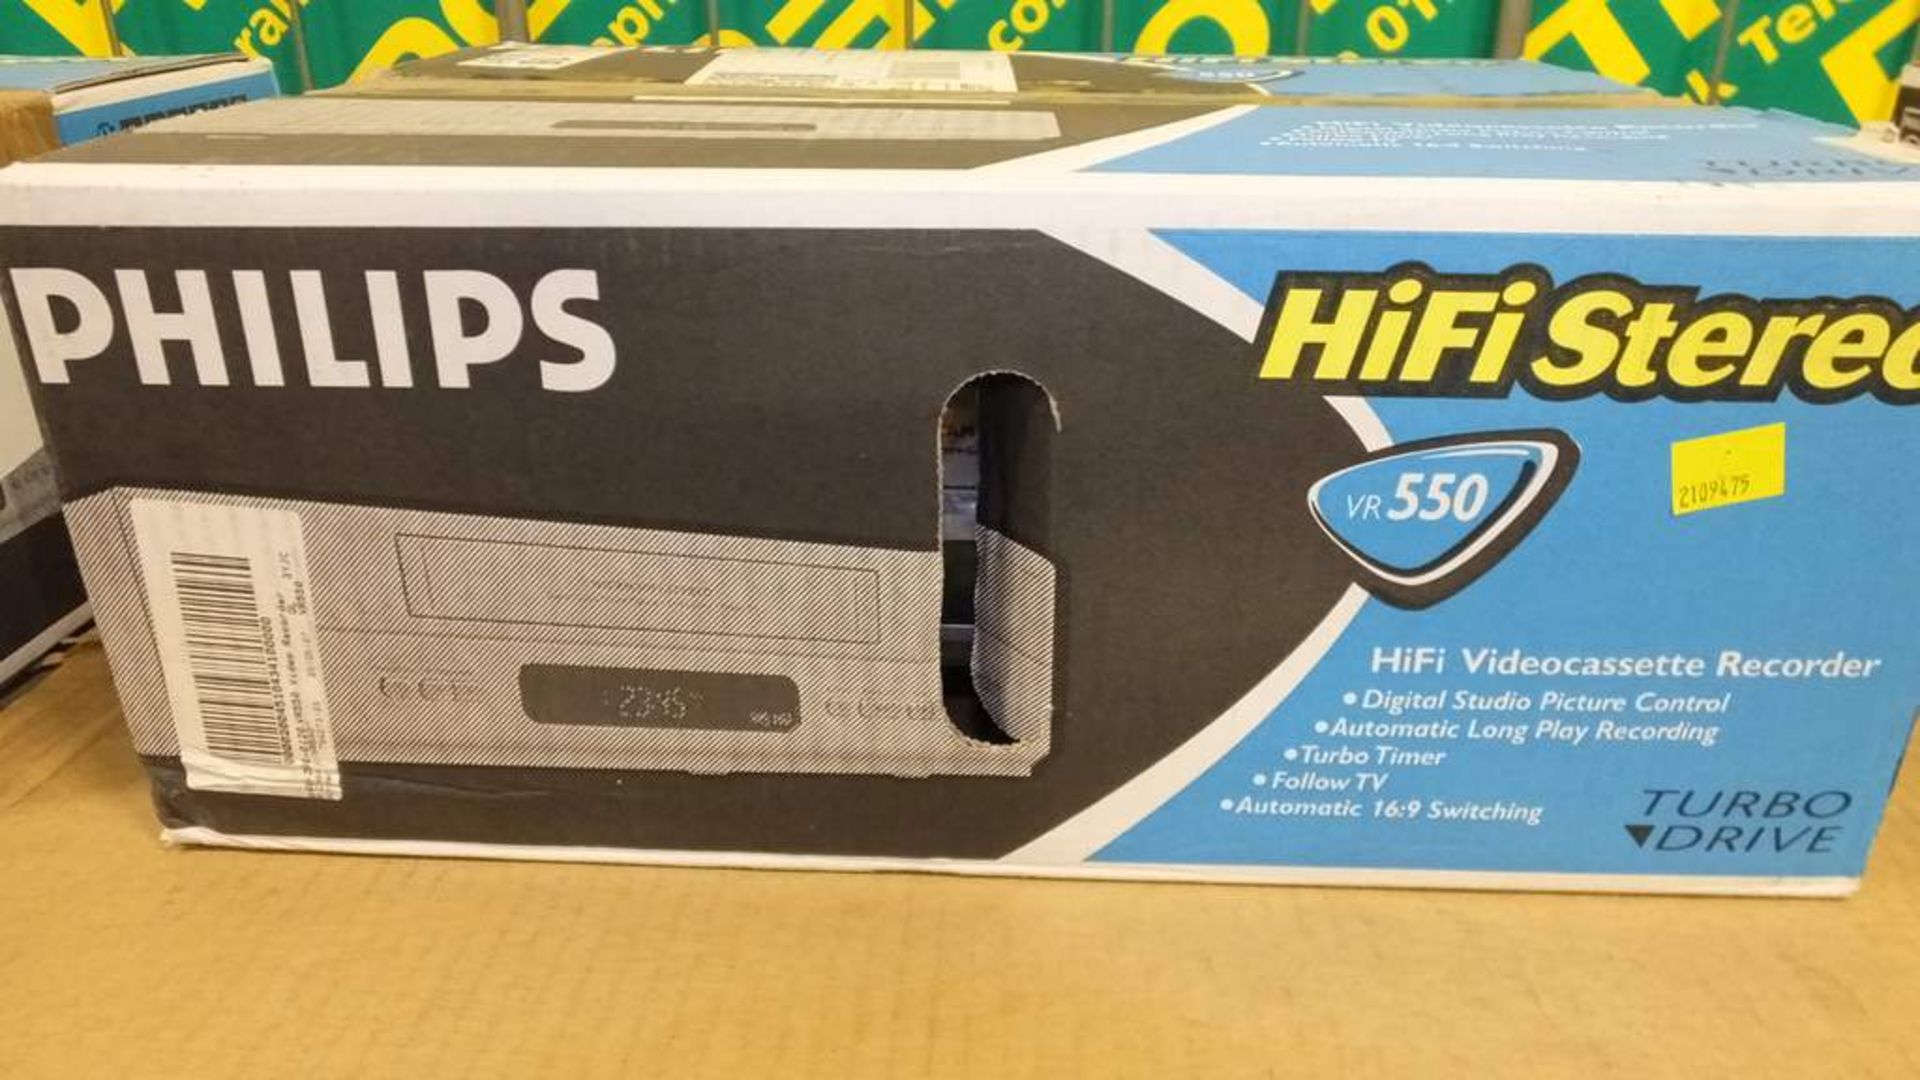 3x Philips HiFi stero VR550